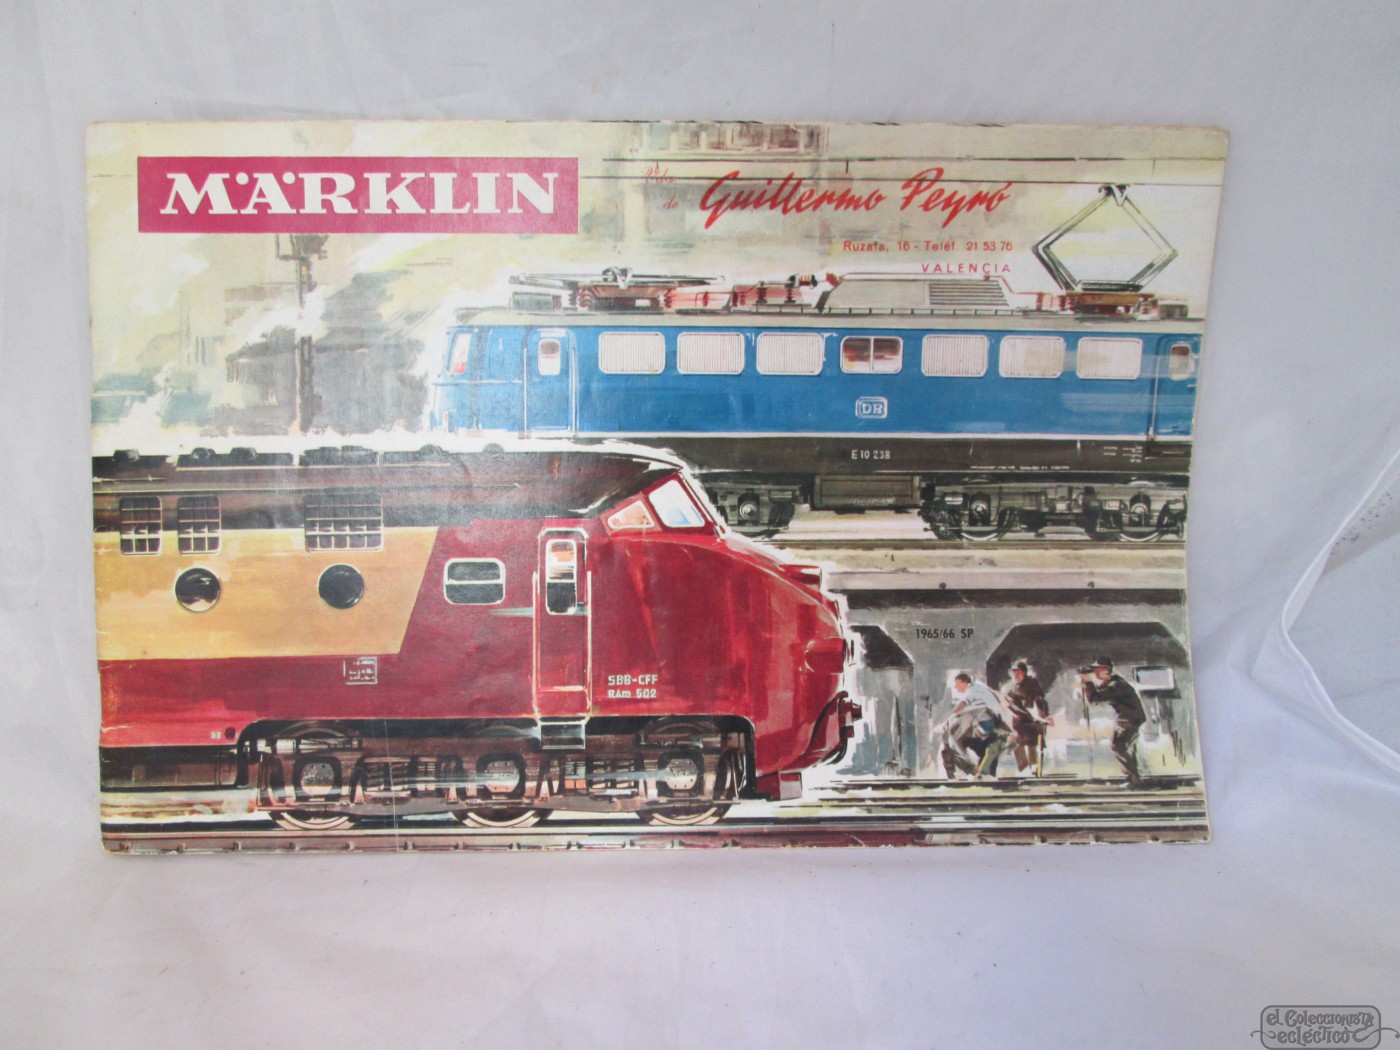 knijpen verkouden worden Parasiet Catalogue of Märklin trains, 1965, Germany, Color, 64 pages, Spanish texts